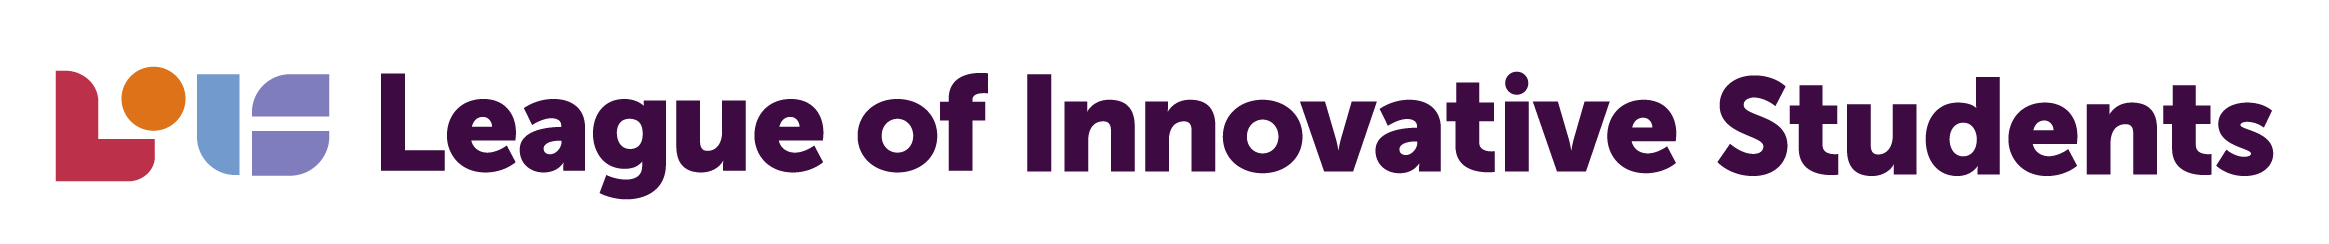 League of Innovative Students logo